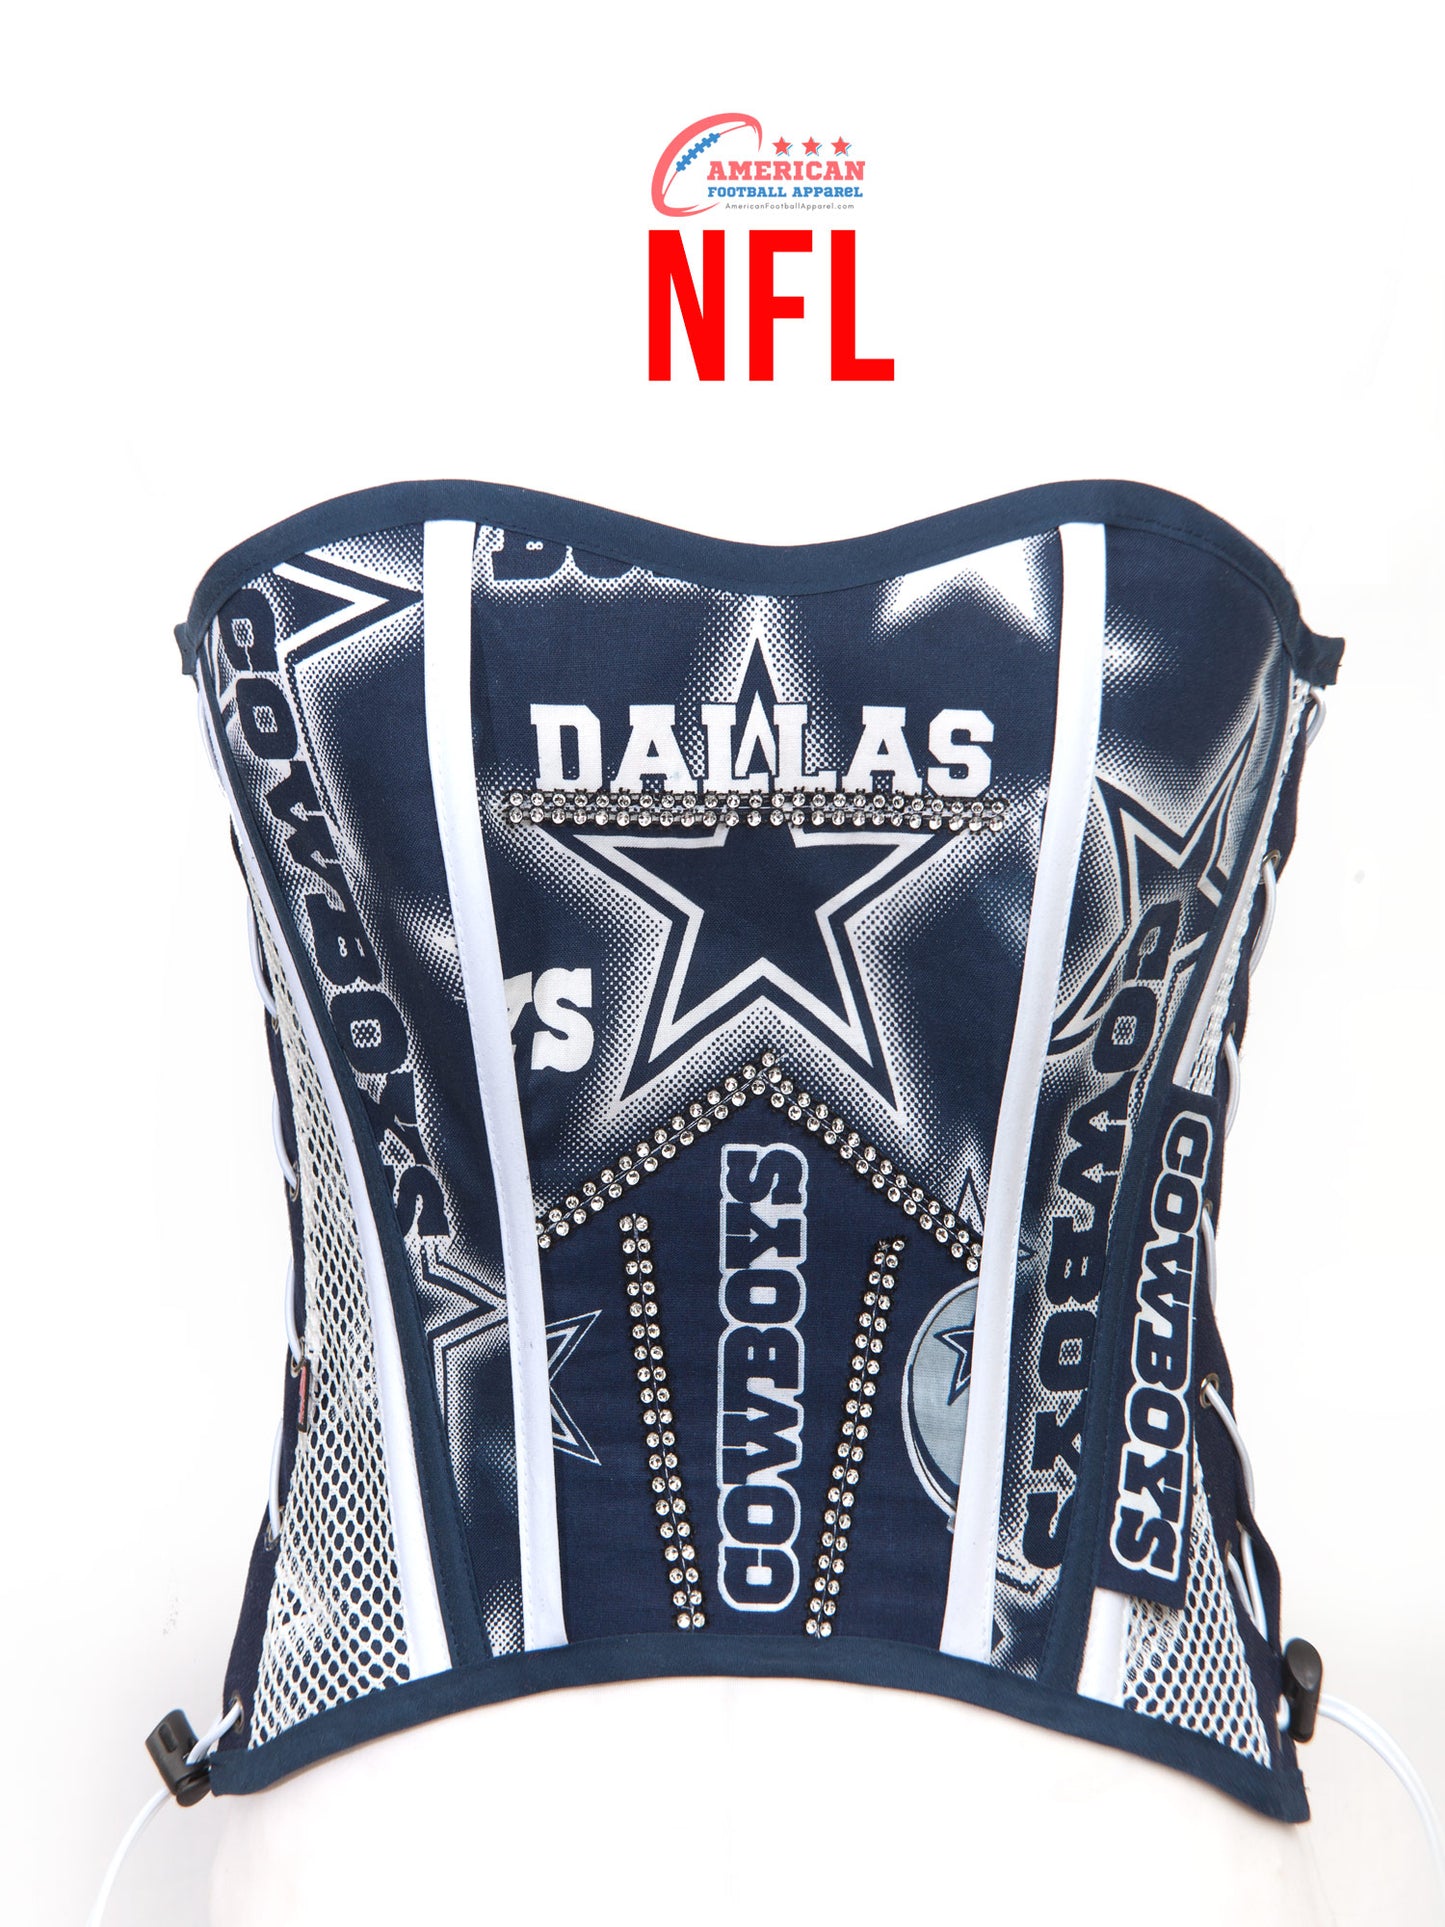 NFL Dallas Cowboys Football Team Corset Bustier Top